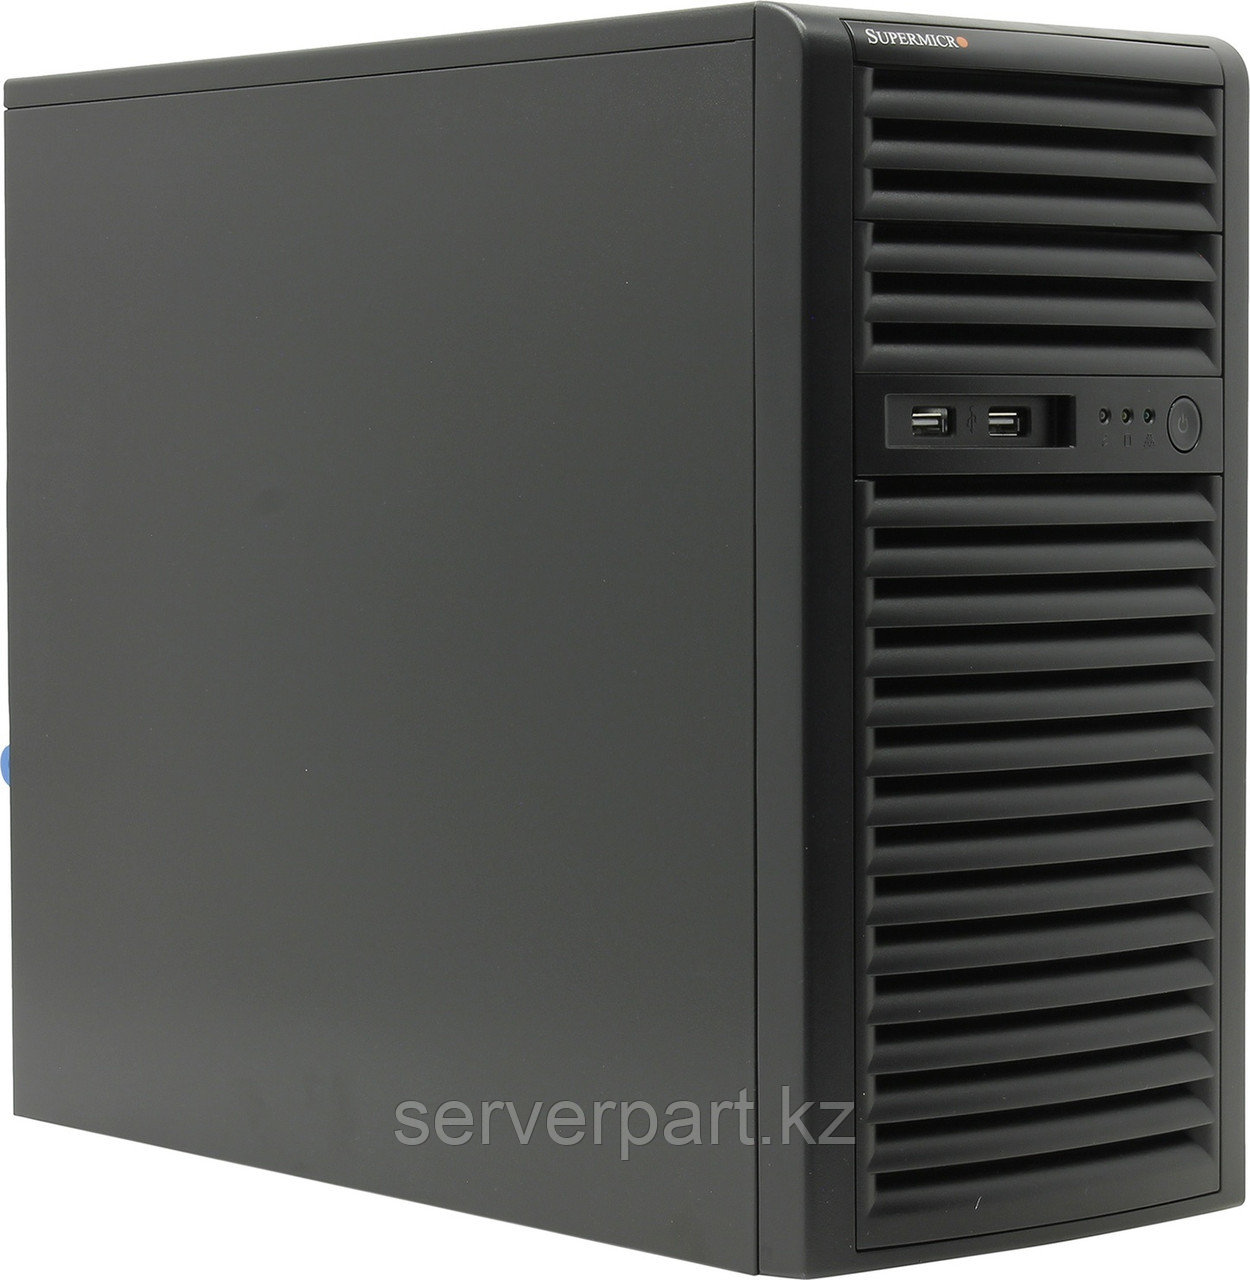 Сервер Supermicro SYS-5039D Tower/4-core intel xeon E3-1220v6 3GHz/48GB EUDIMM/1x480GB SSD MU Hyb